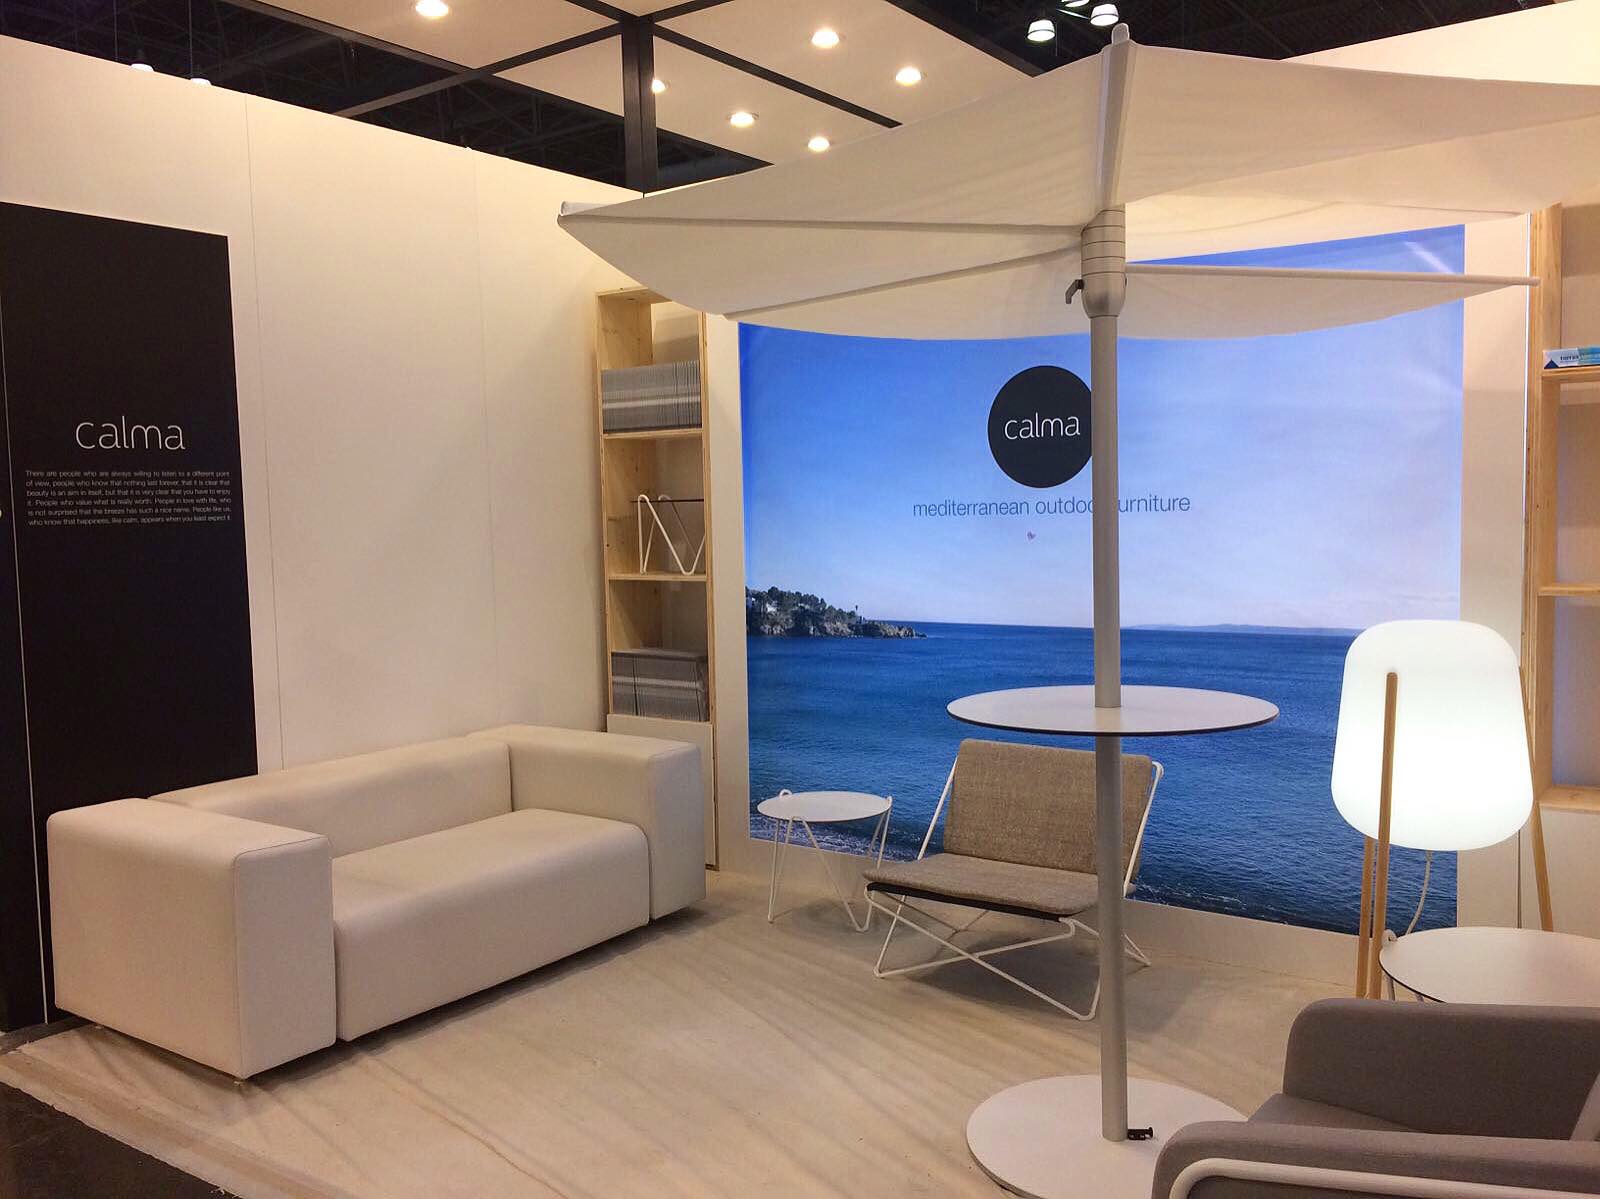 Patricia Urquiola's showroom interior for Kettal celebrates Mediterranean  outdoor living